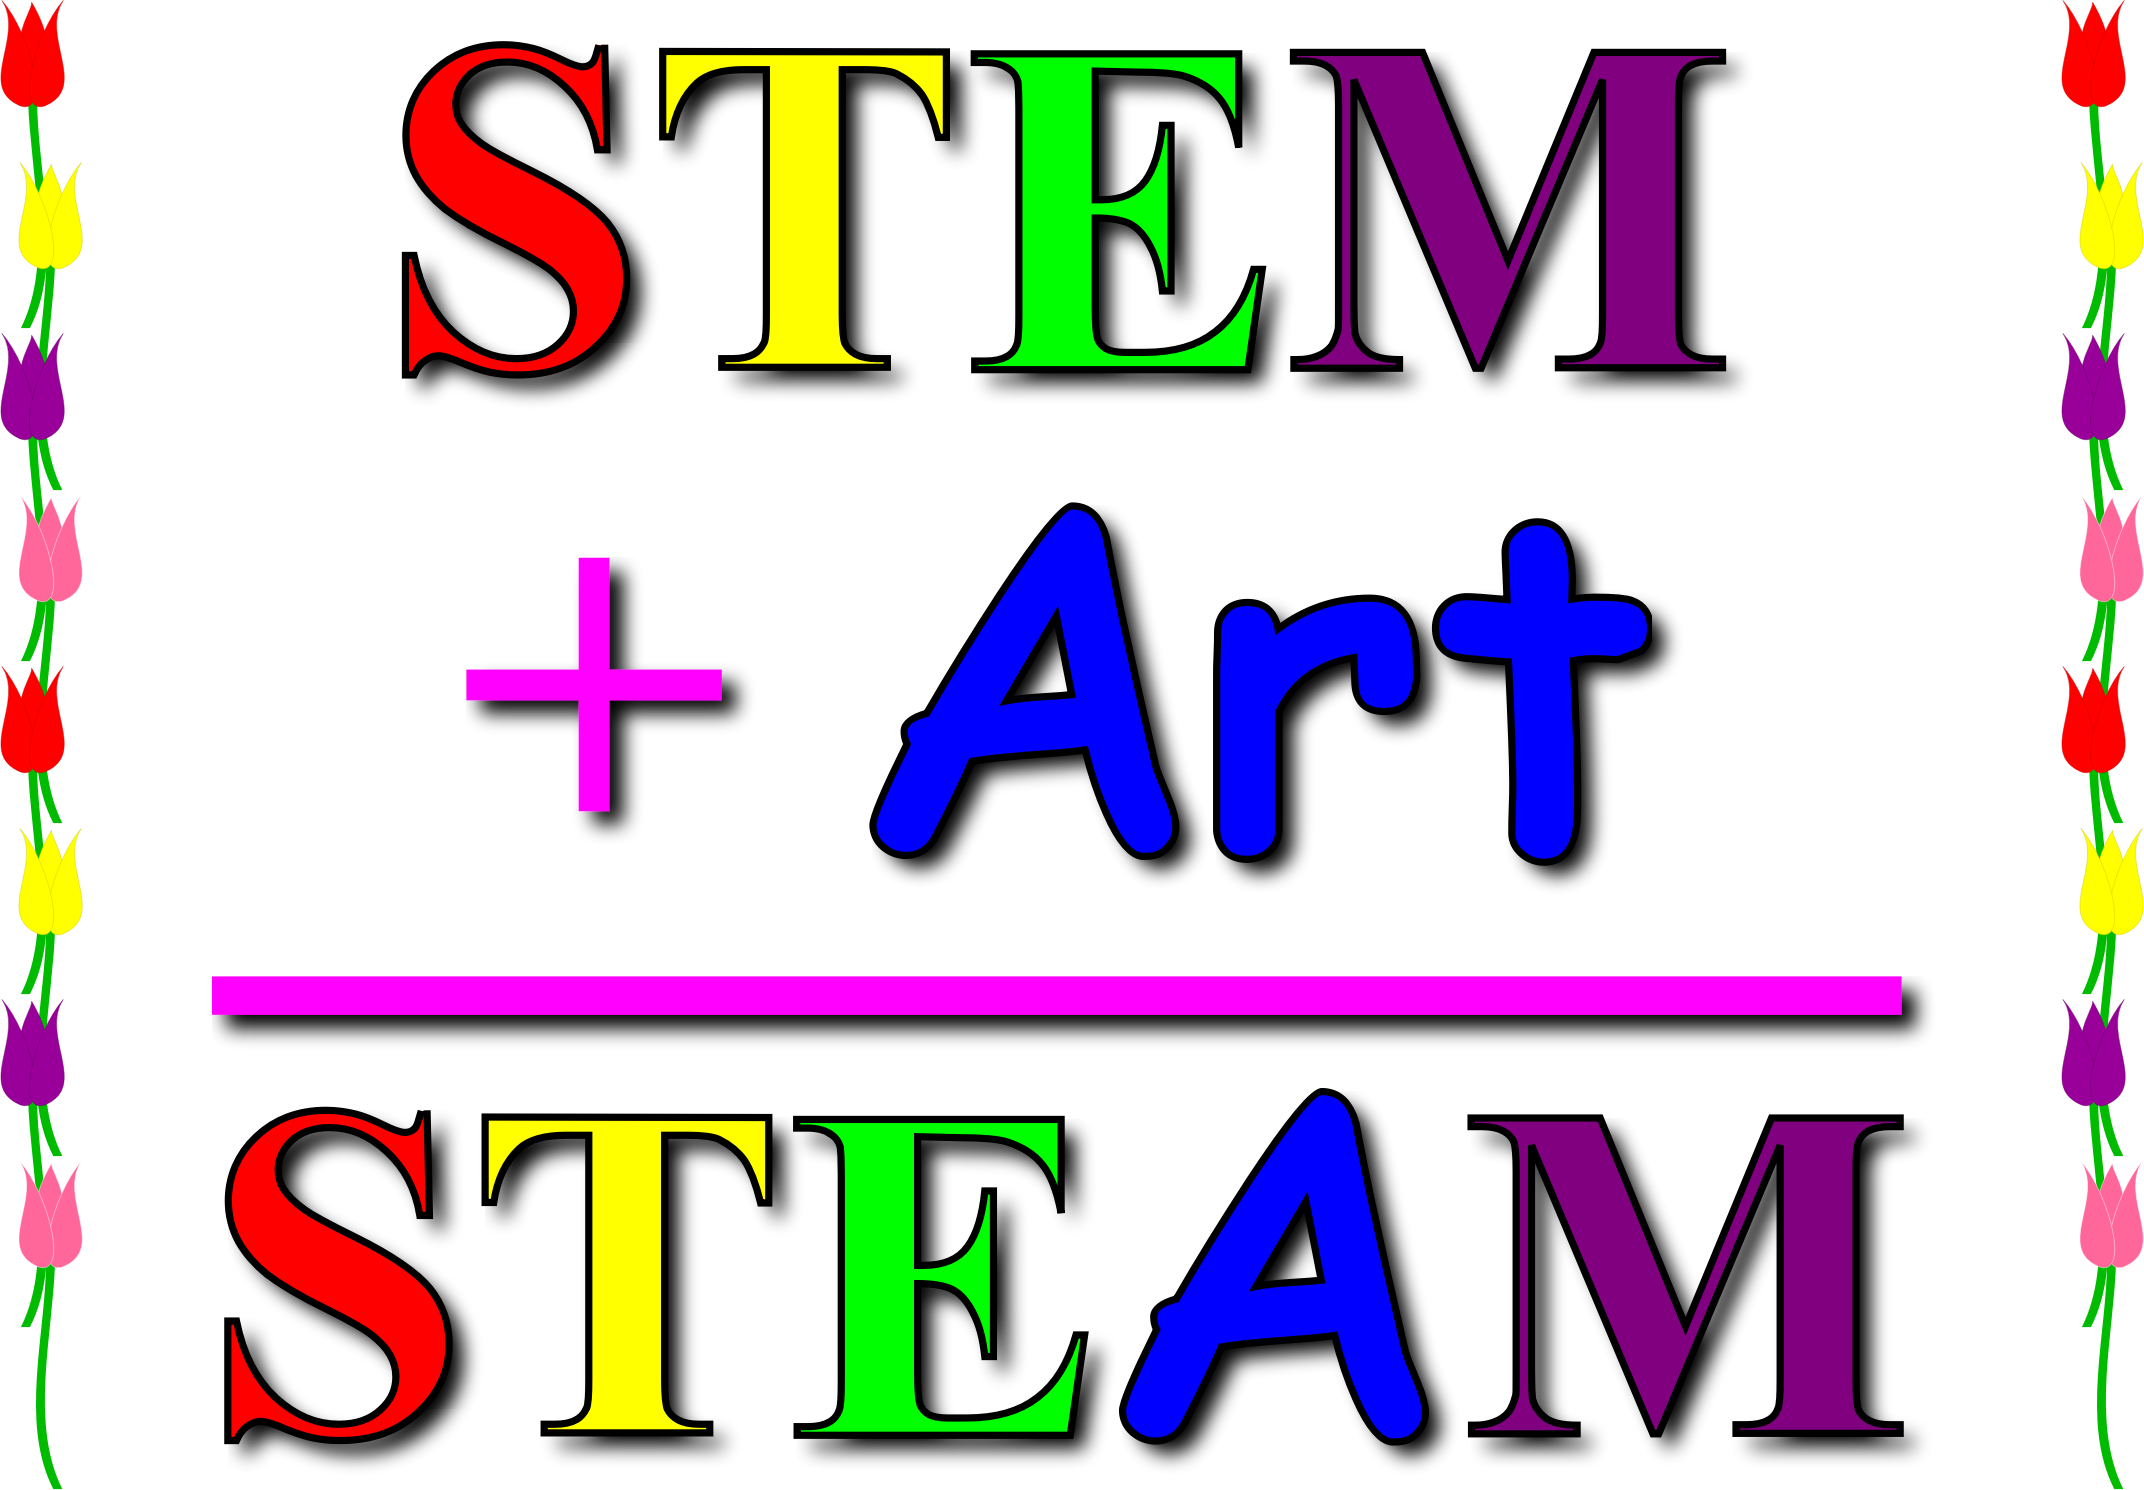 Steam science technology engineering math фото 94